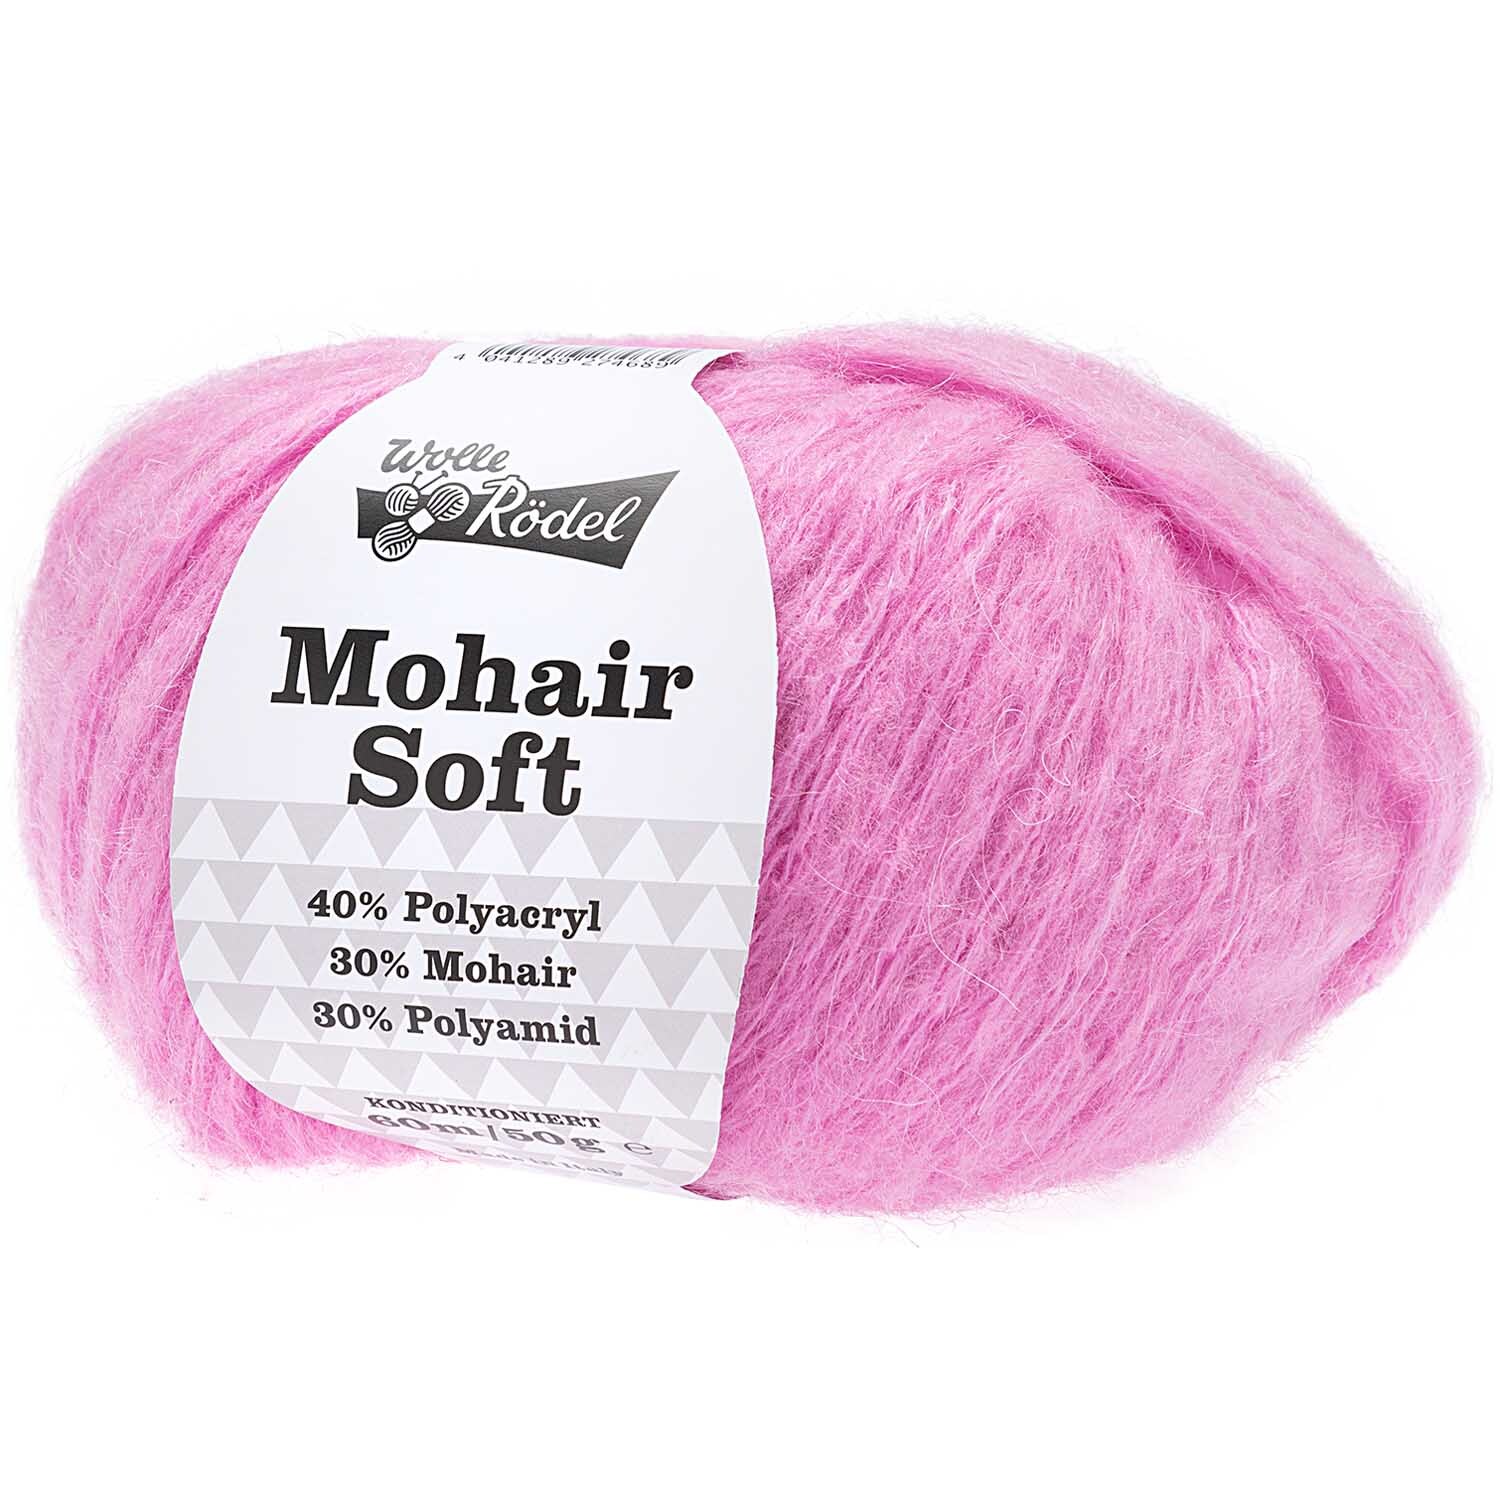 Mohair Soft